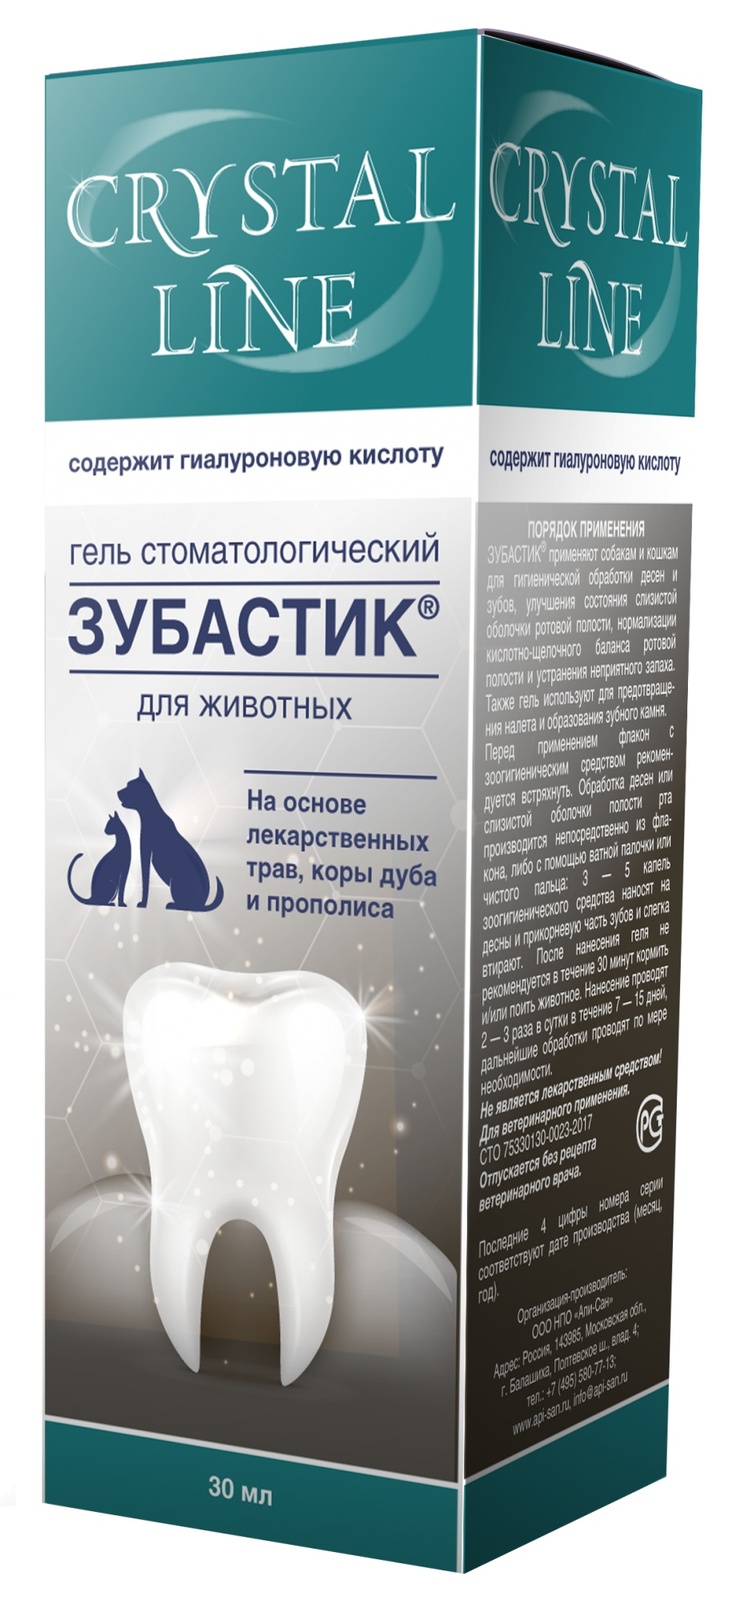 Apicenna зубастик гель для чистки зубов Crystal line (30 г) Apicenna зубастик гель для чистки зубов Crystal line (30 г) - фото 1